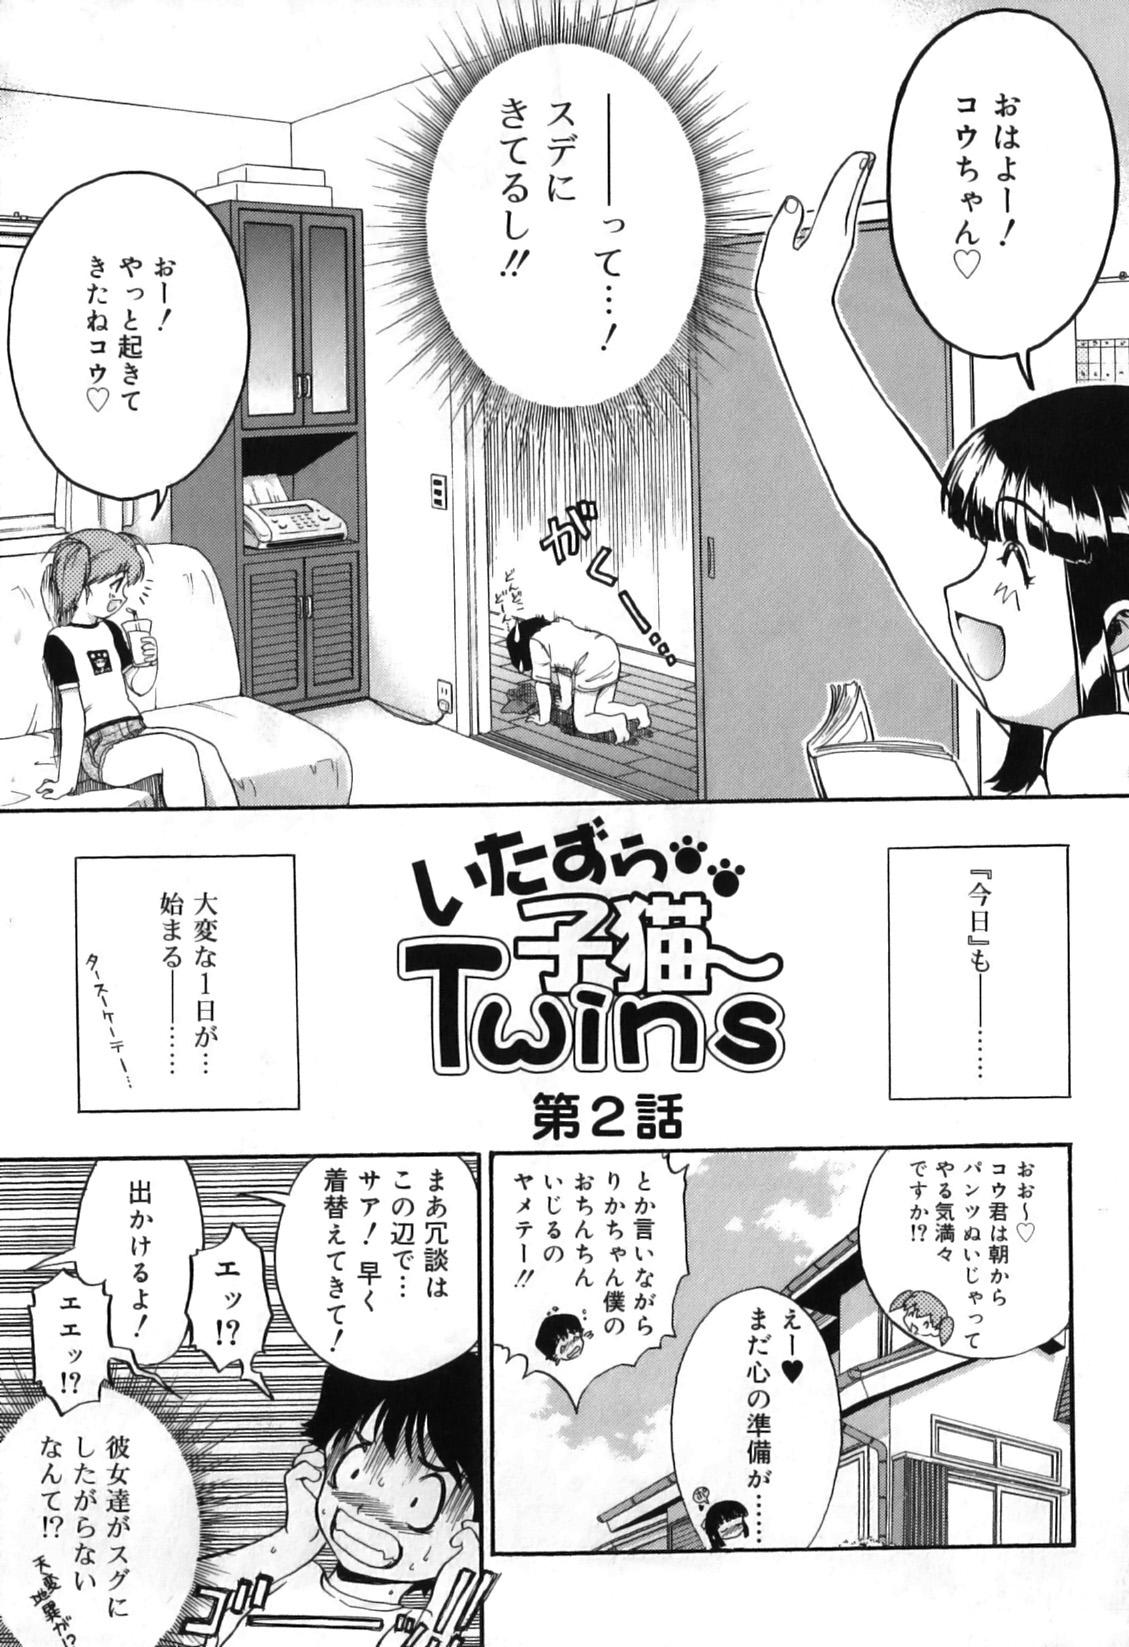 Itazura Koneko Twins 38